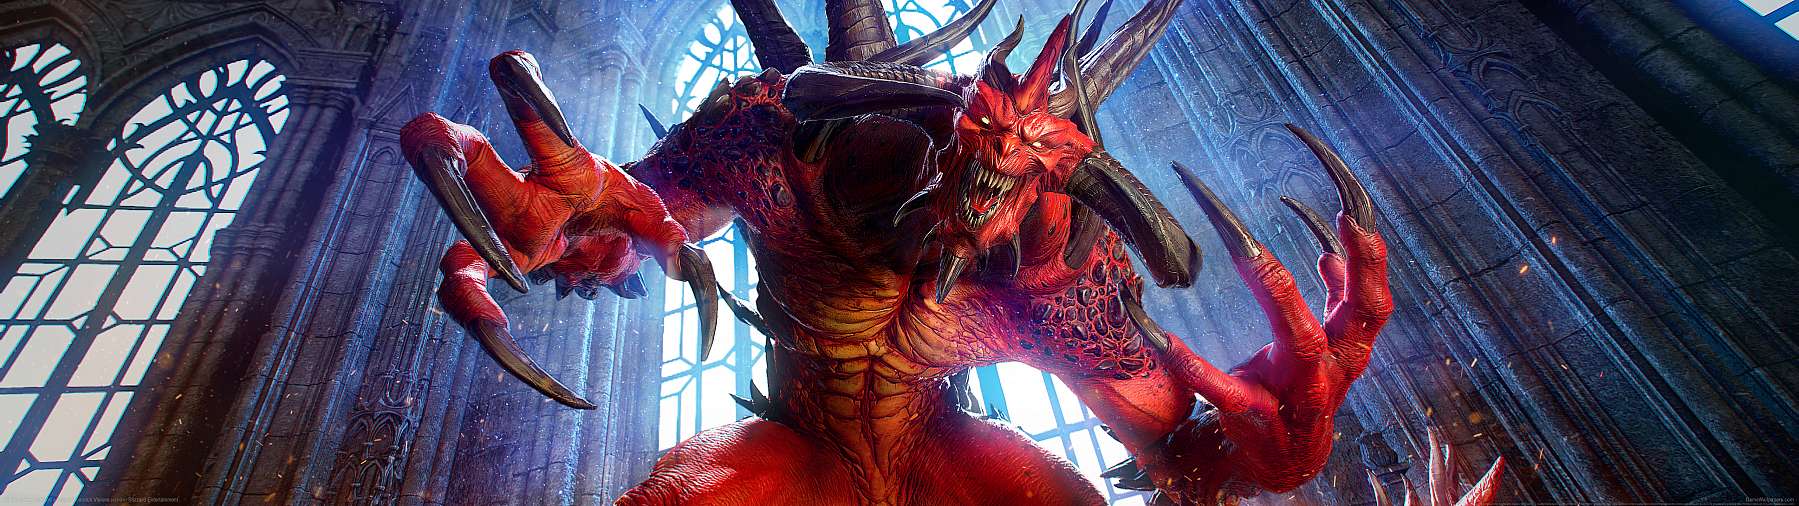 Diablo 2: Resurrected superwide fond d'cran 09